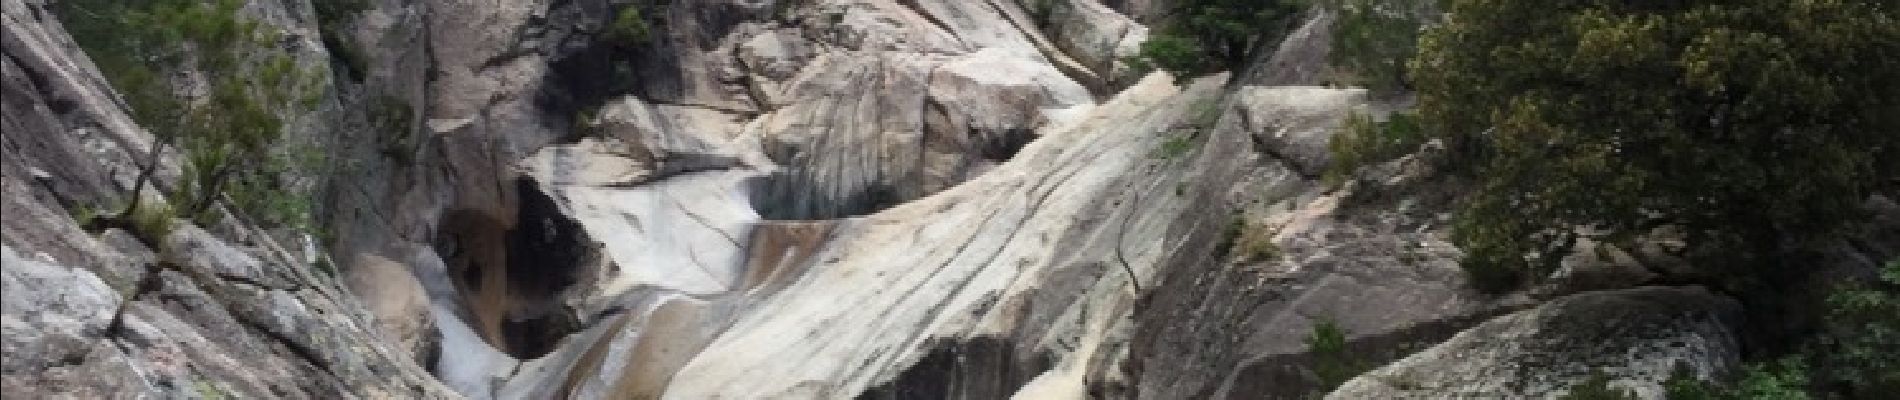 Tour Wandern Quenza - cascade purcaraccia - Photo